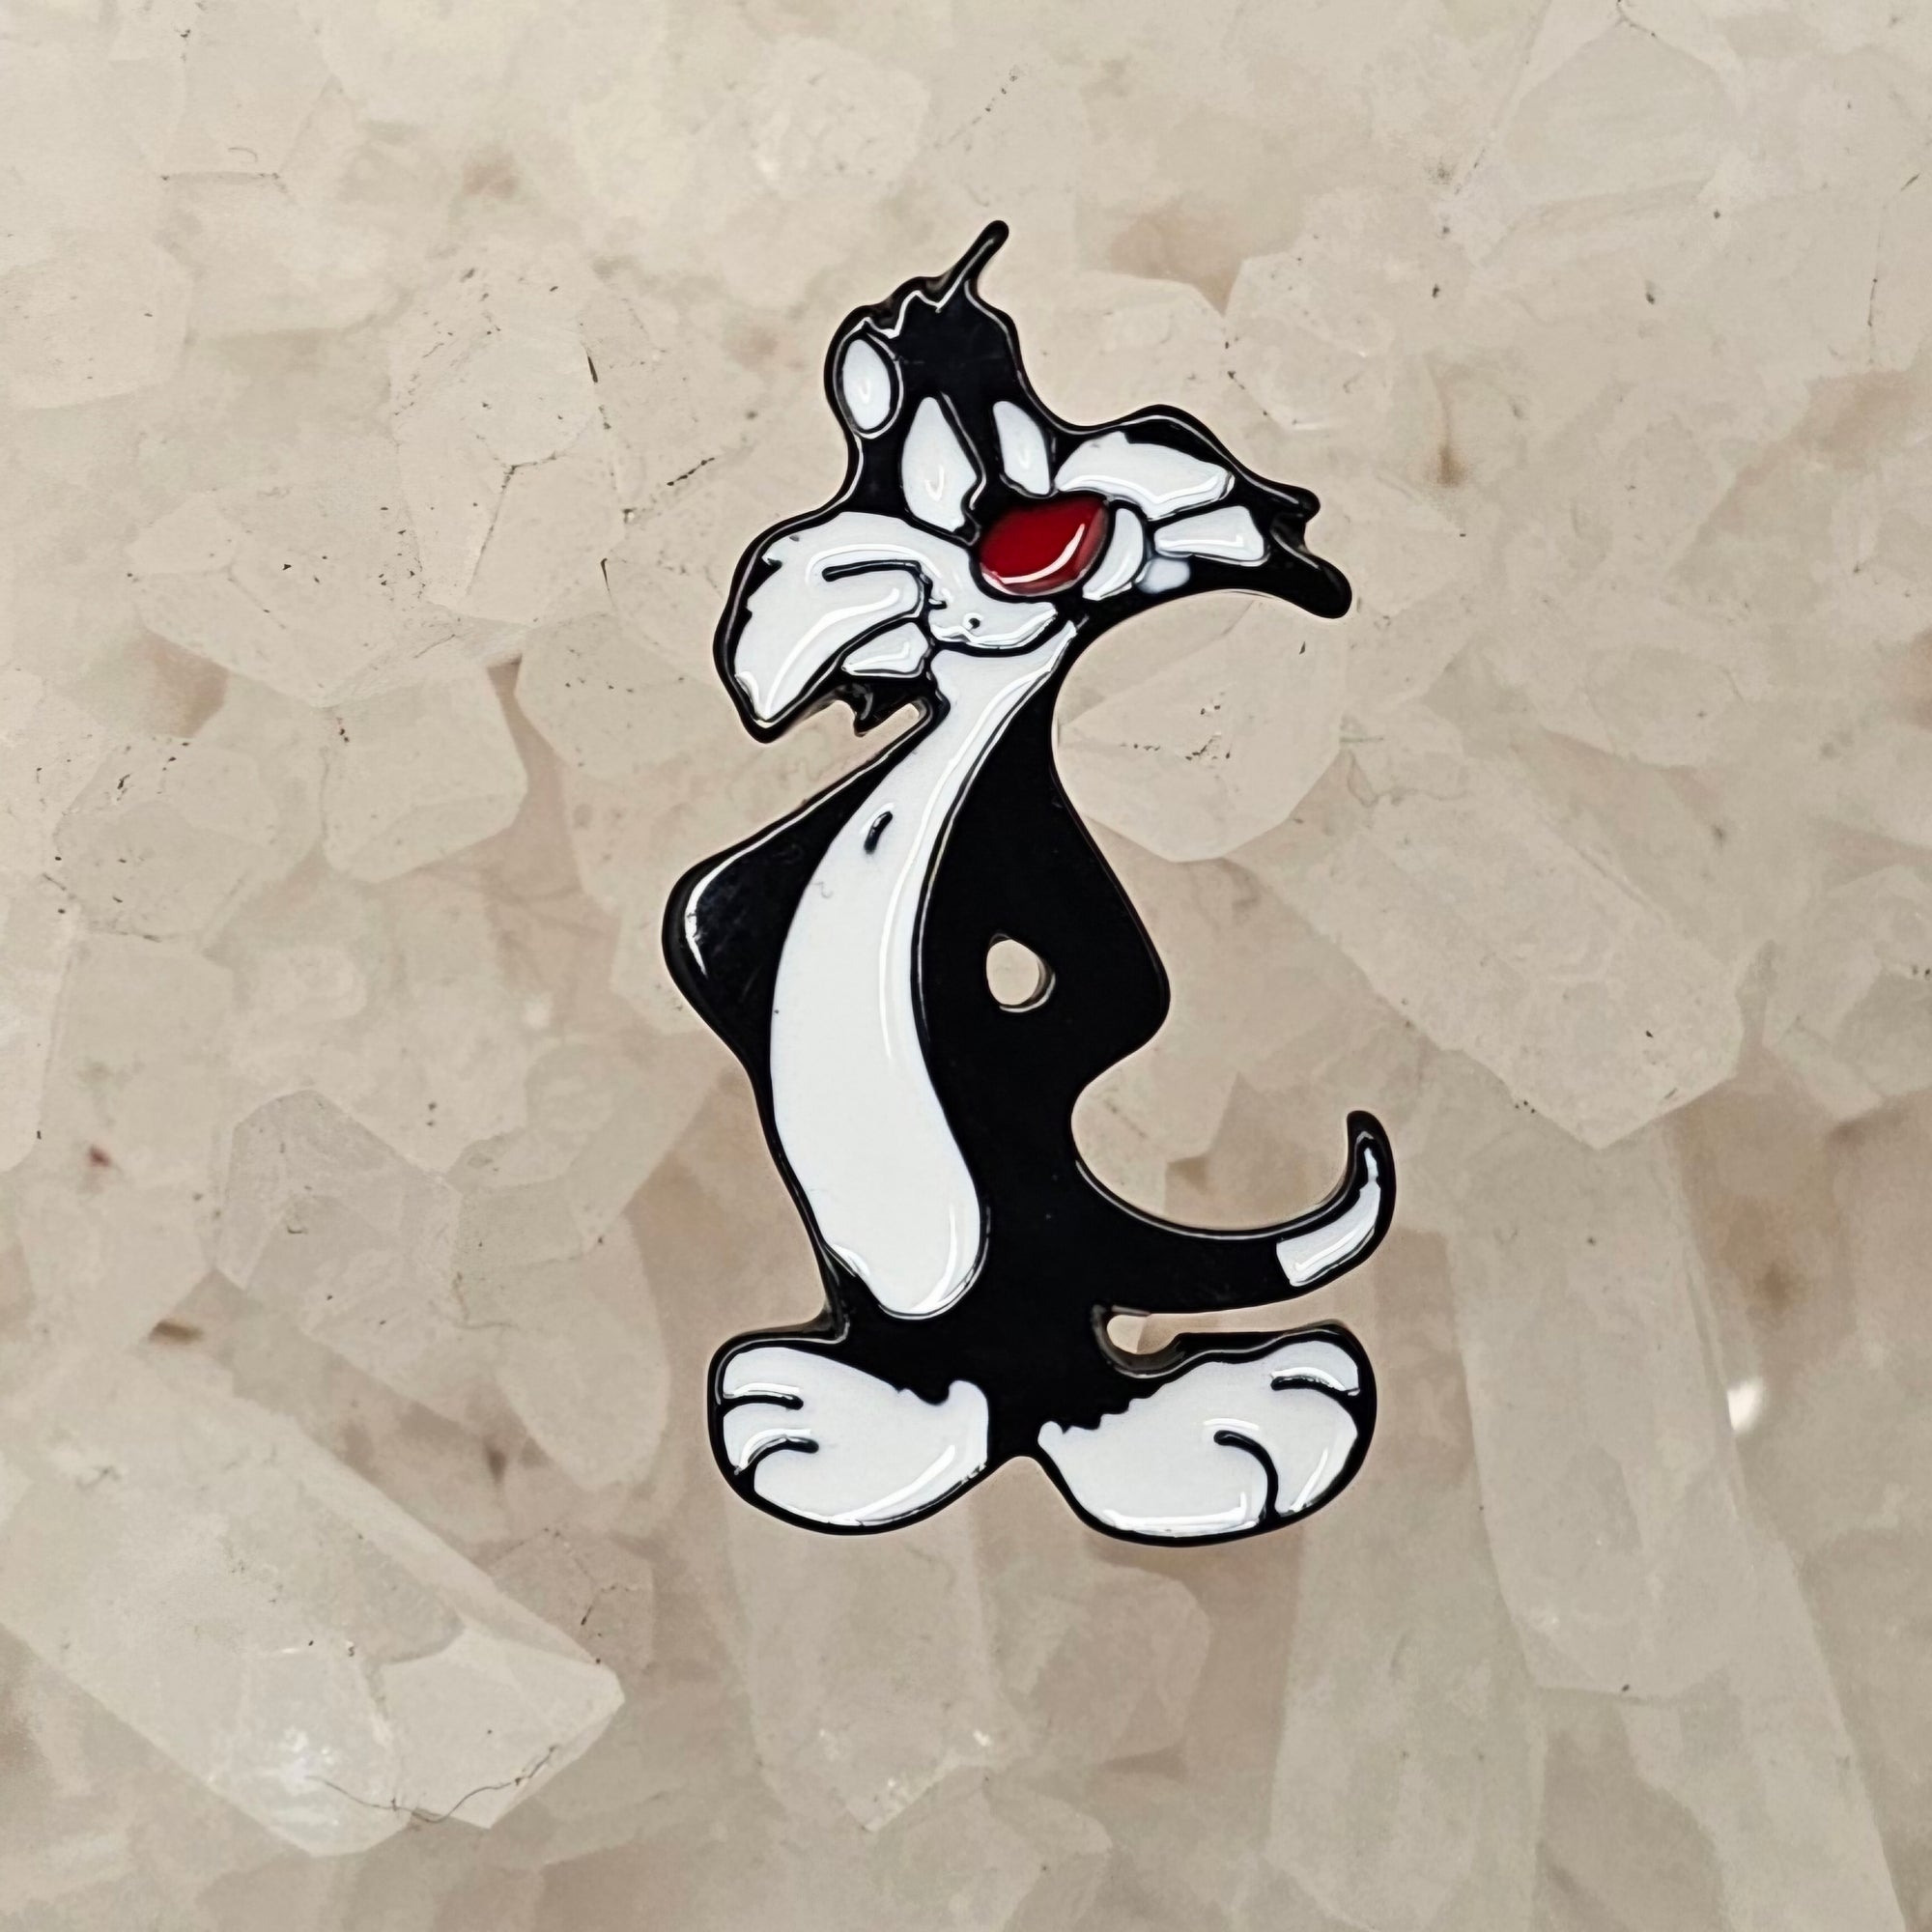 Looney Sylvester Tunes The Cat Classic Cartoon Enamel Pins Hat Pins Lapel Pin Brooch Badge Festival Pin